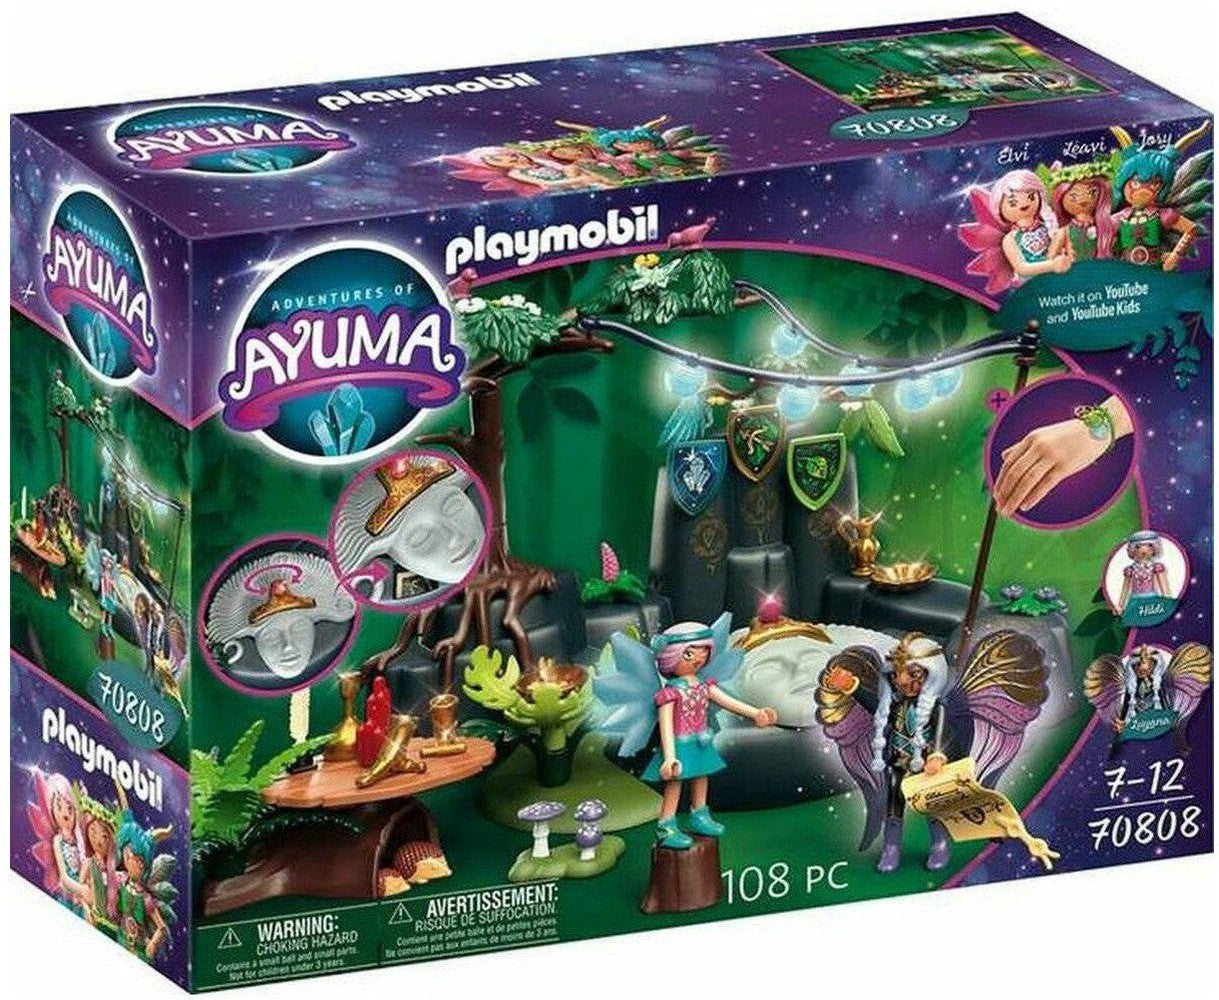 Playset Playmobil Adventures of Ayum Spring Ceremony 70808 (108 pcs)